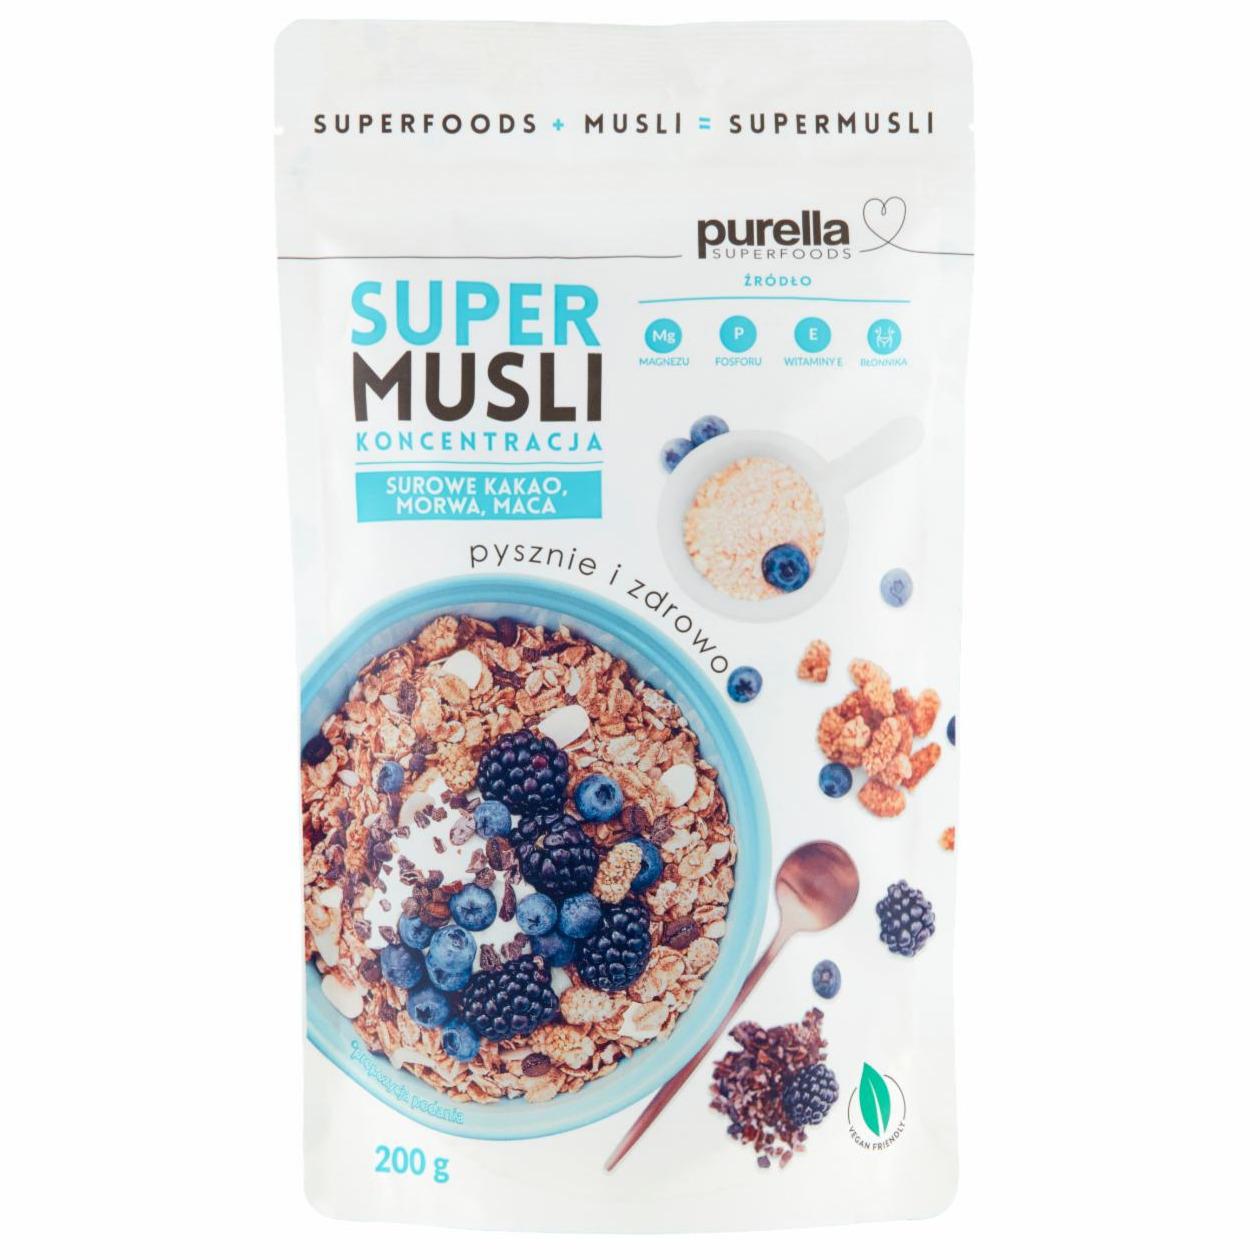 Zdjęcia - Purella Superfoods Supermusli koncentracja 200 g